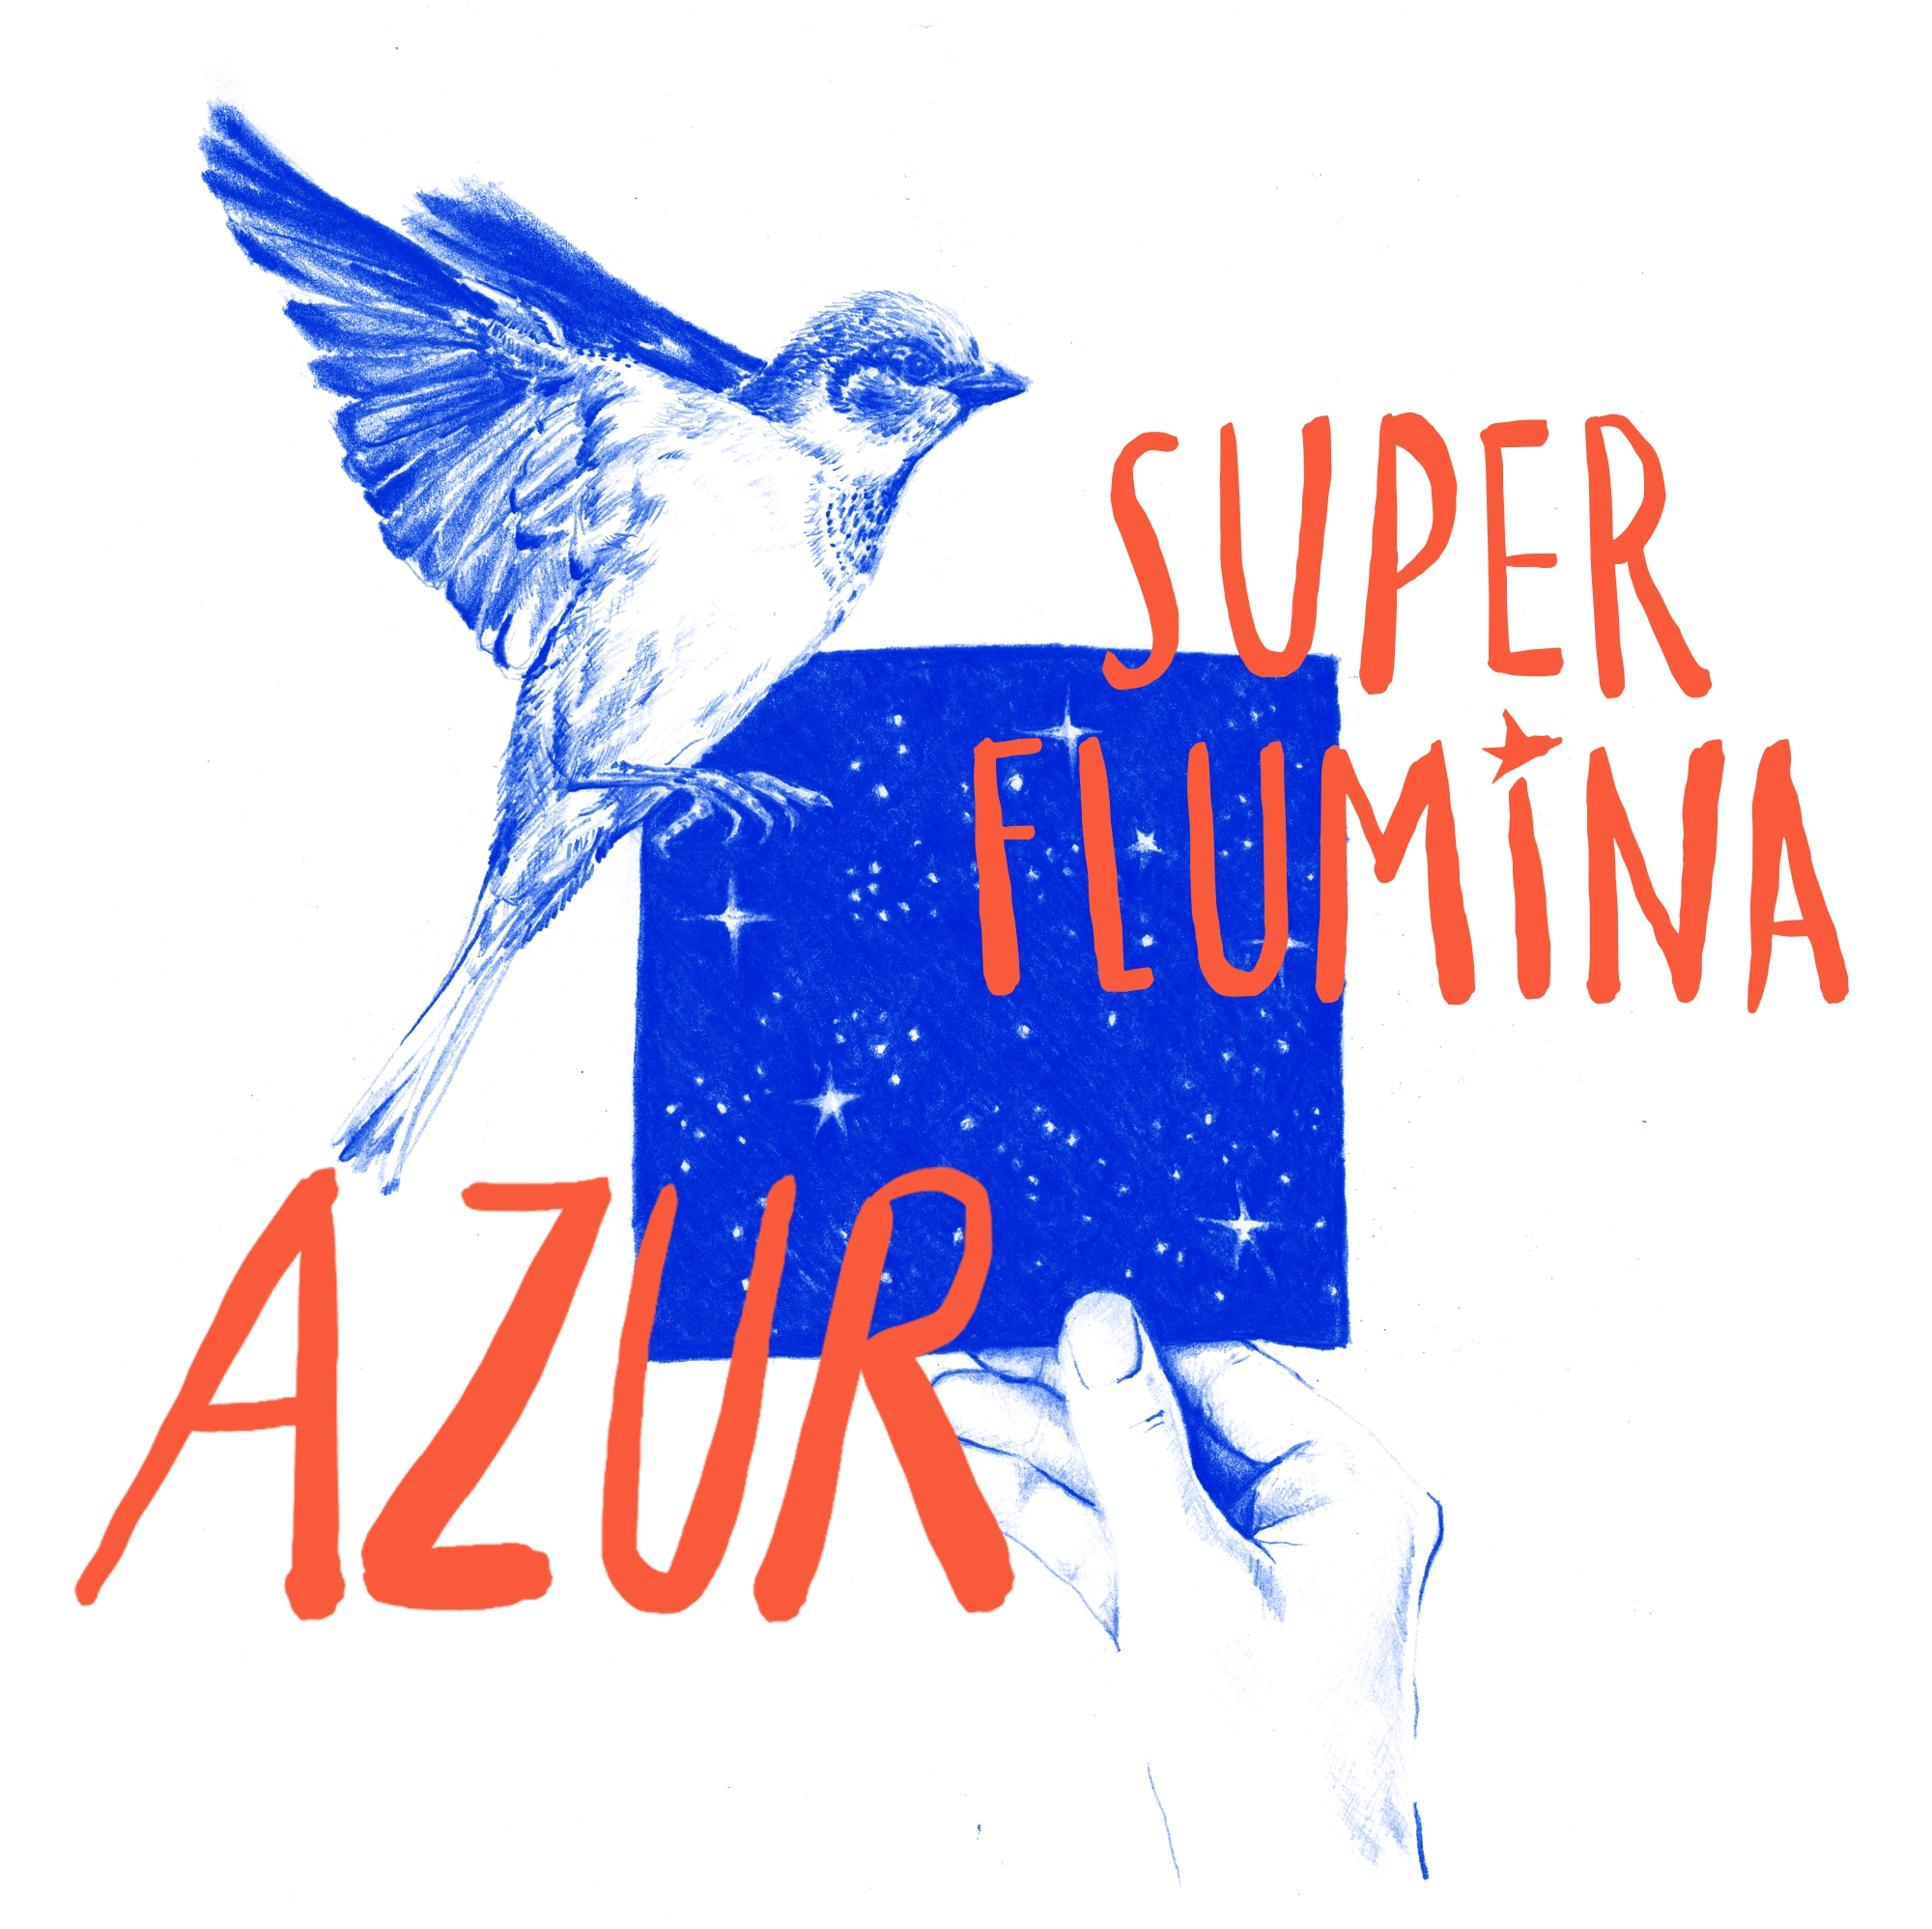  Super Flumina inicia un viaje de exploración con “Azur”